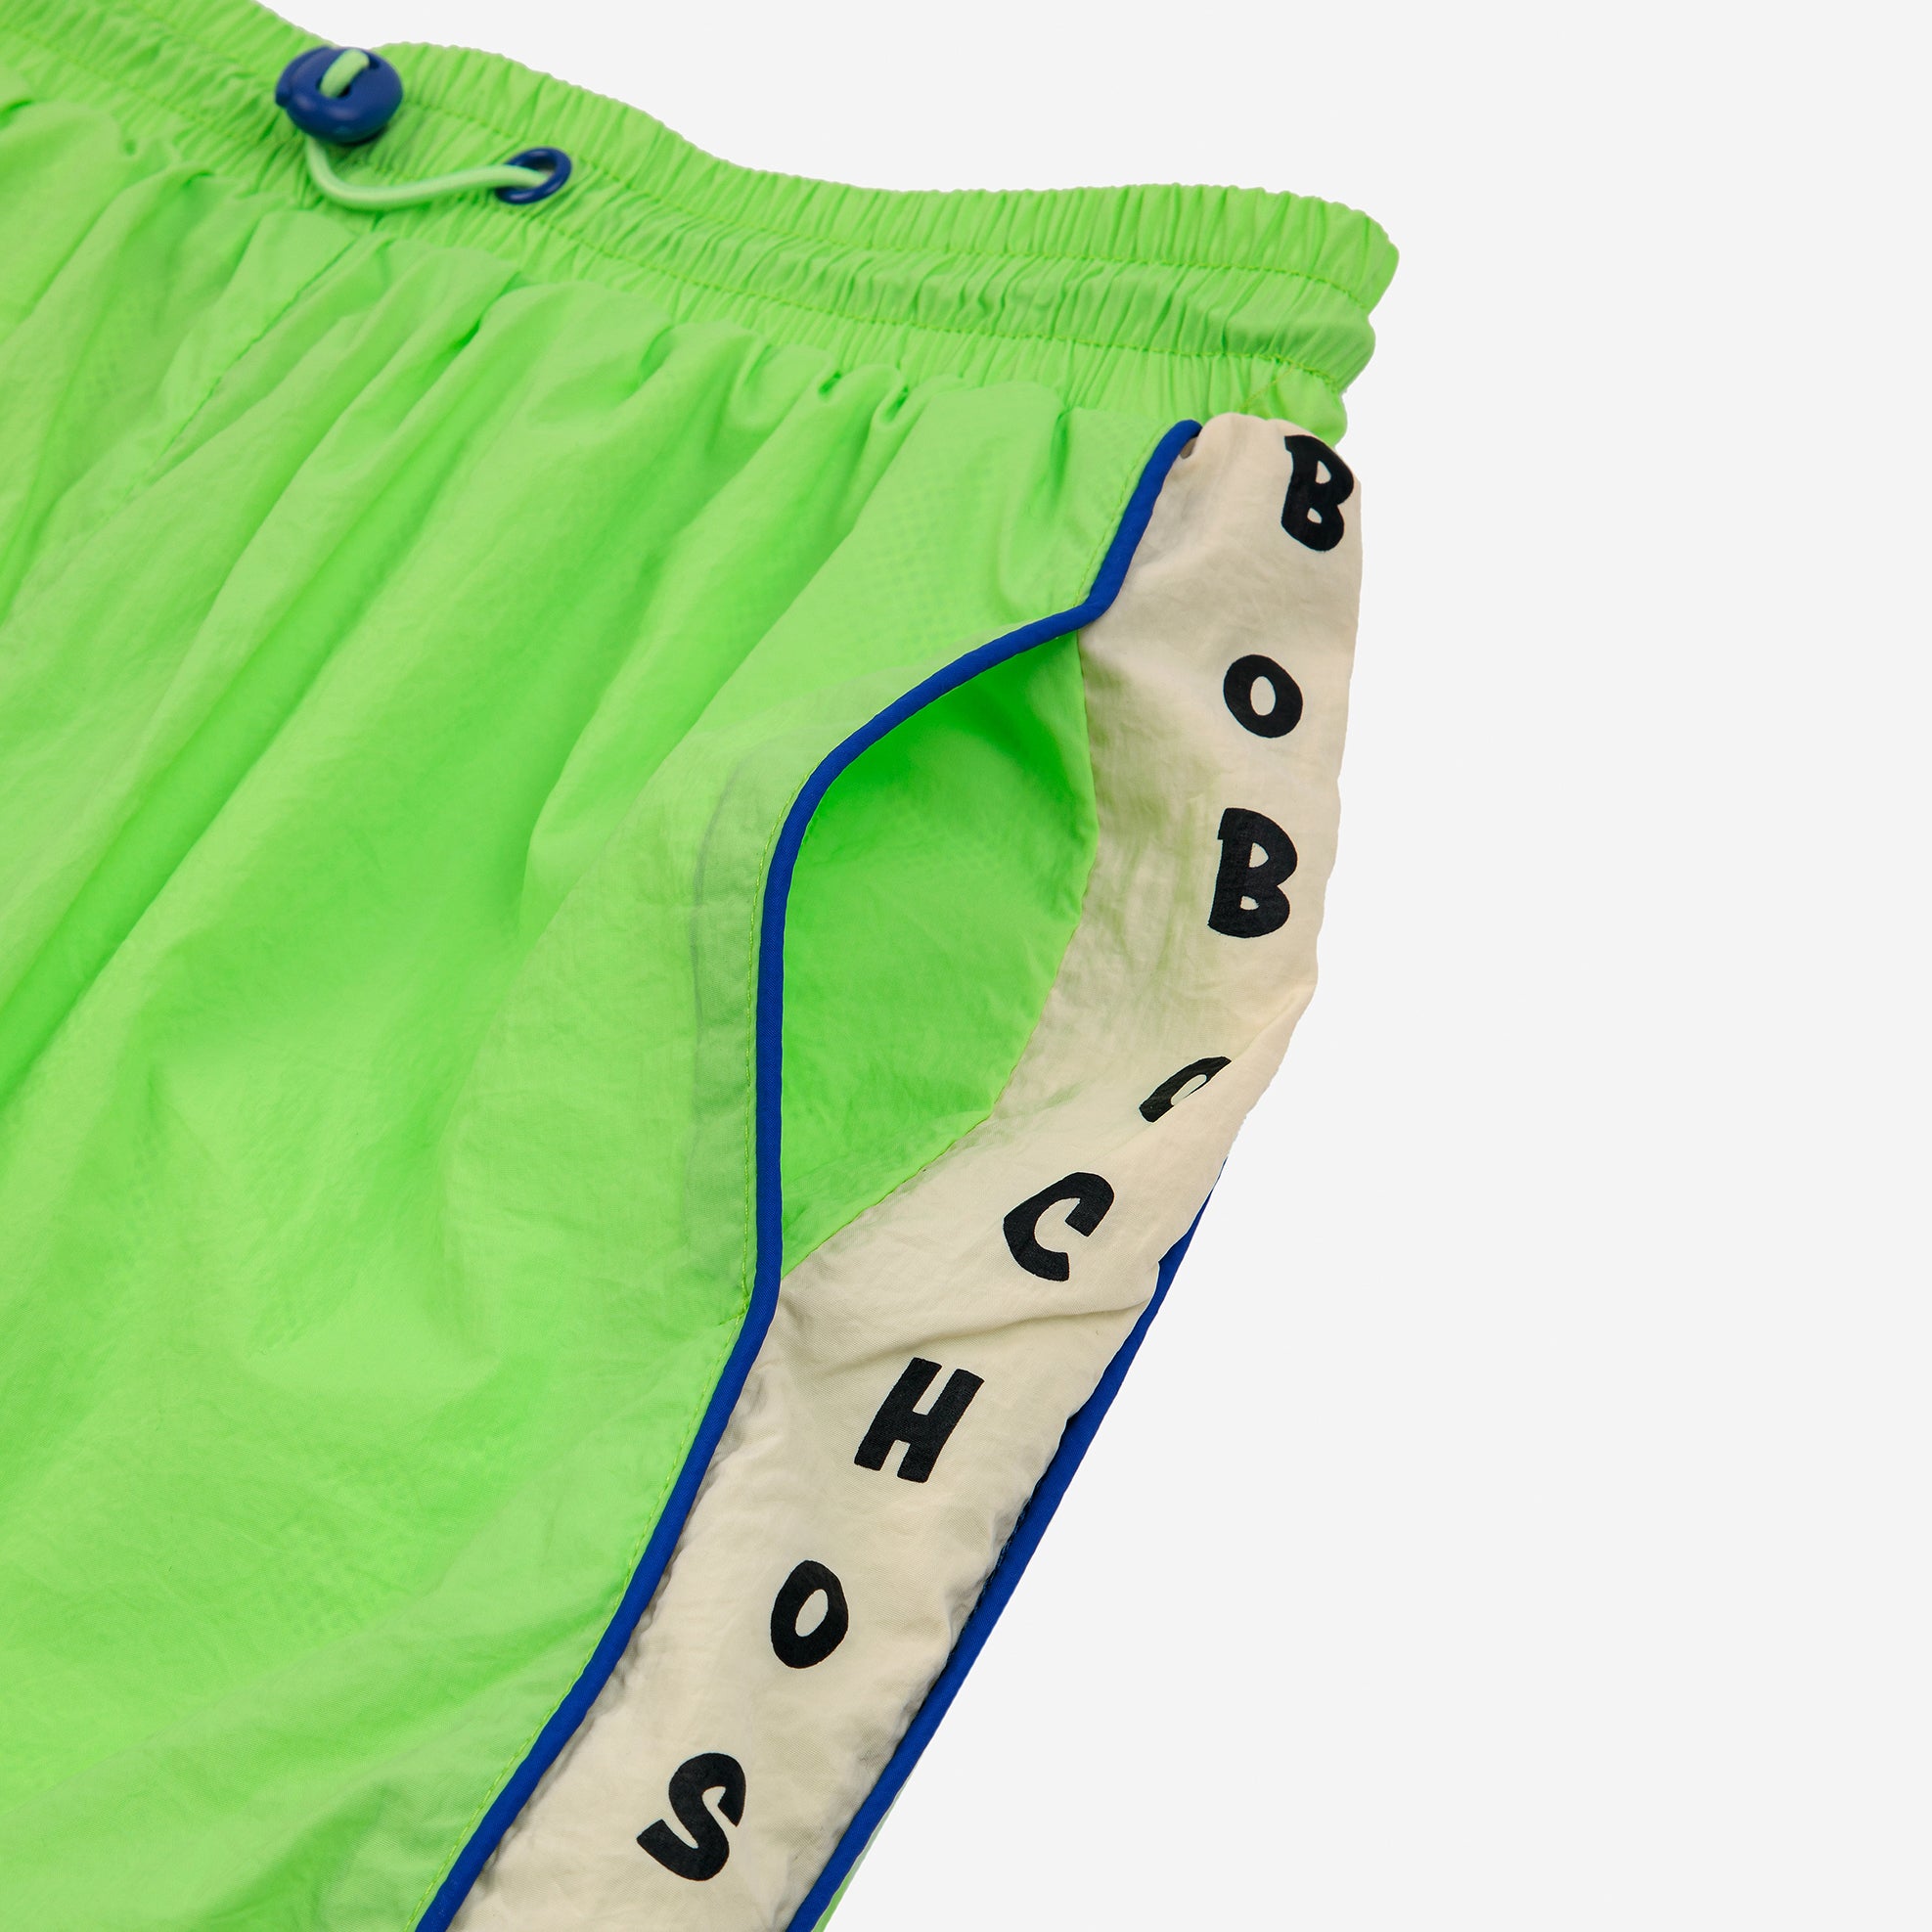 Boys Fluo Green Shorts